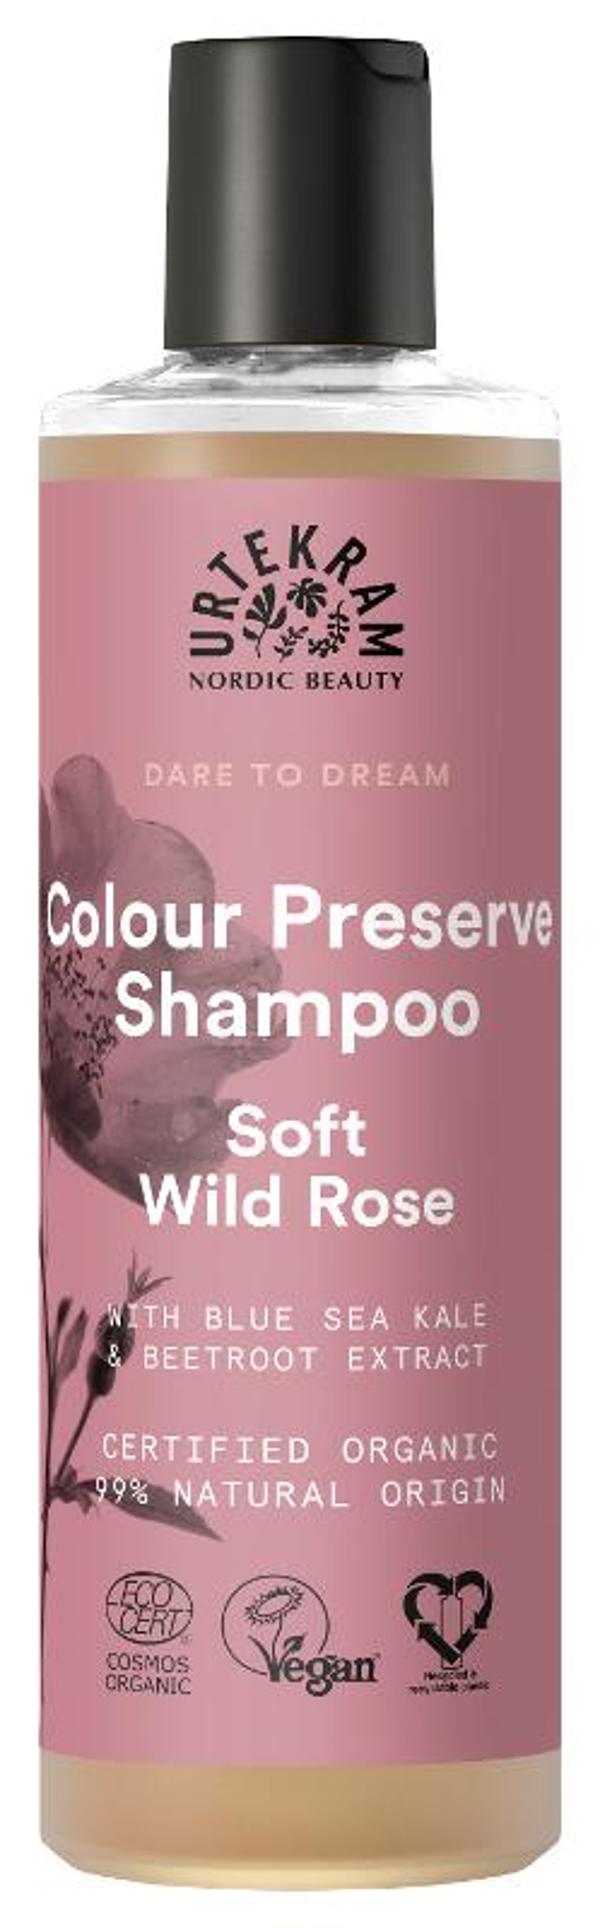 Produktfoto zu Soft Wild Rose Shampoo 250ml